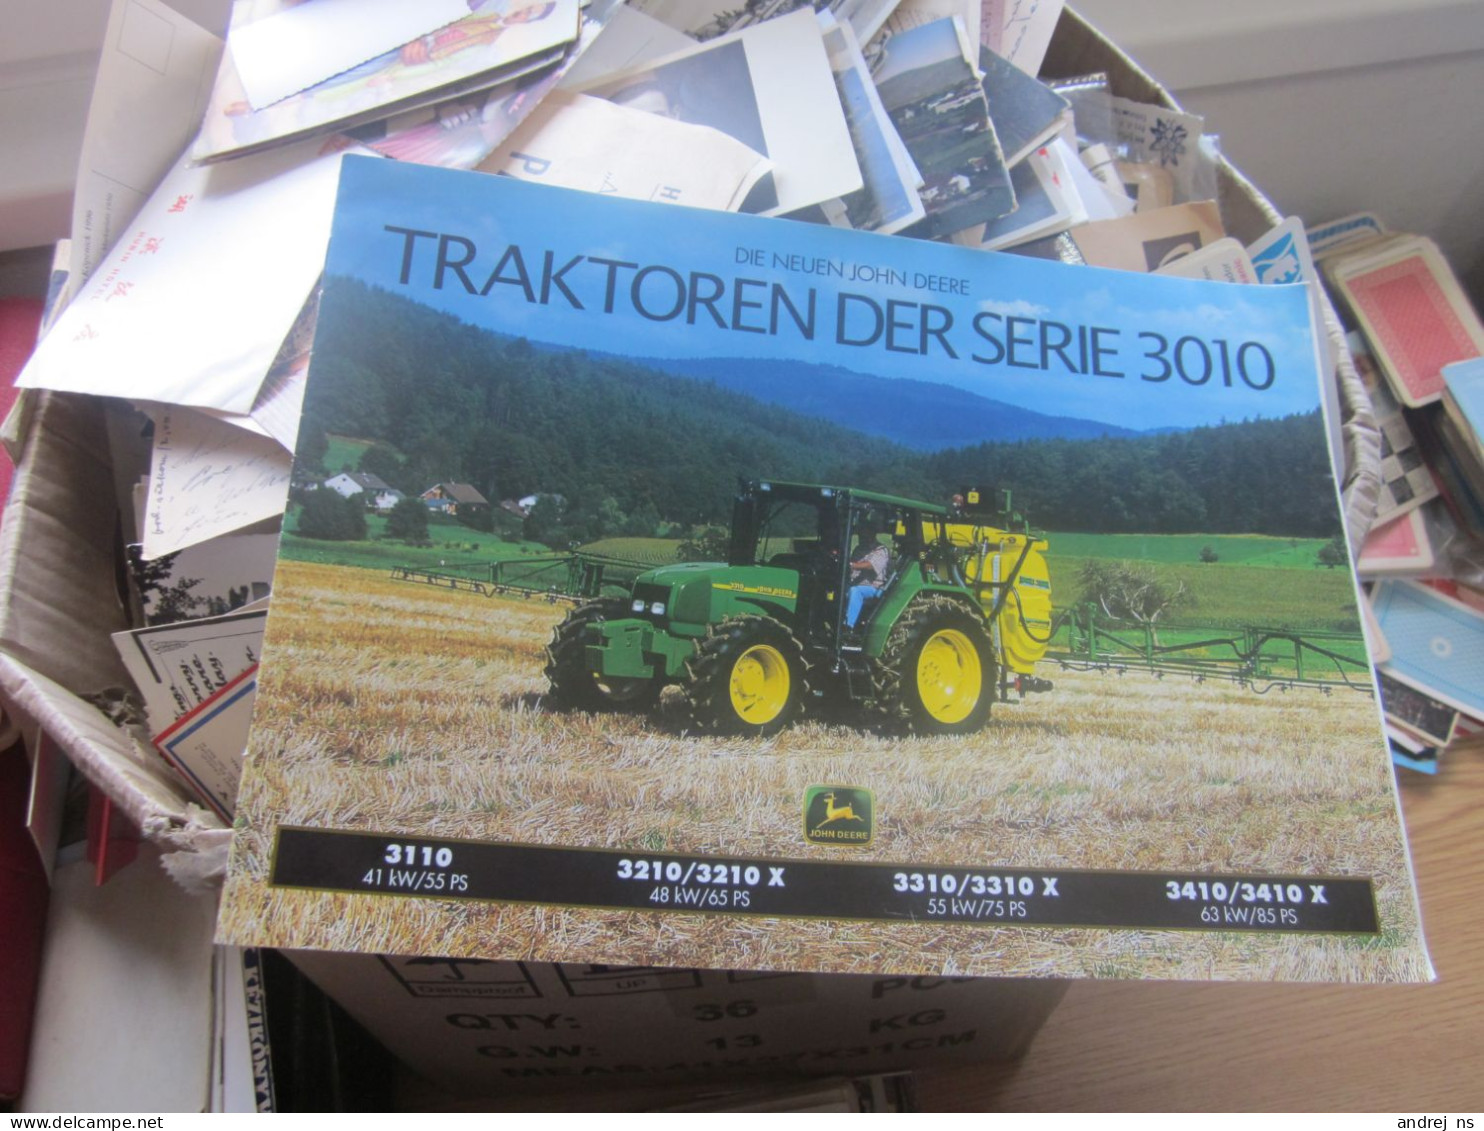 Die Neuen John Deere Traktoren Der Serie 3010 Catalog Of Tractors And Agricultural Machinery - Advertising